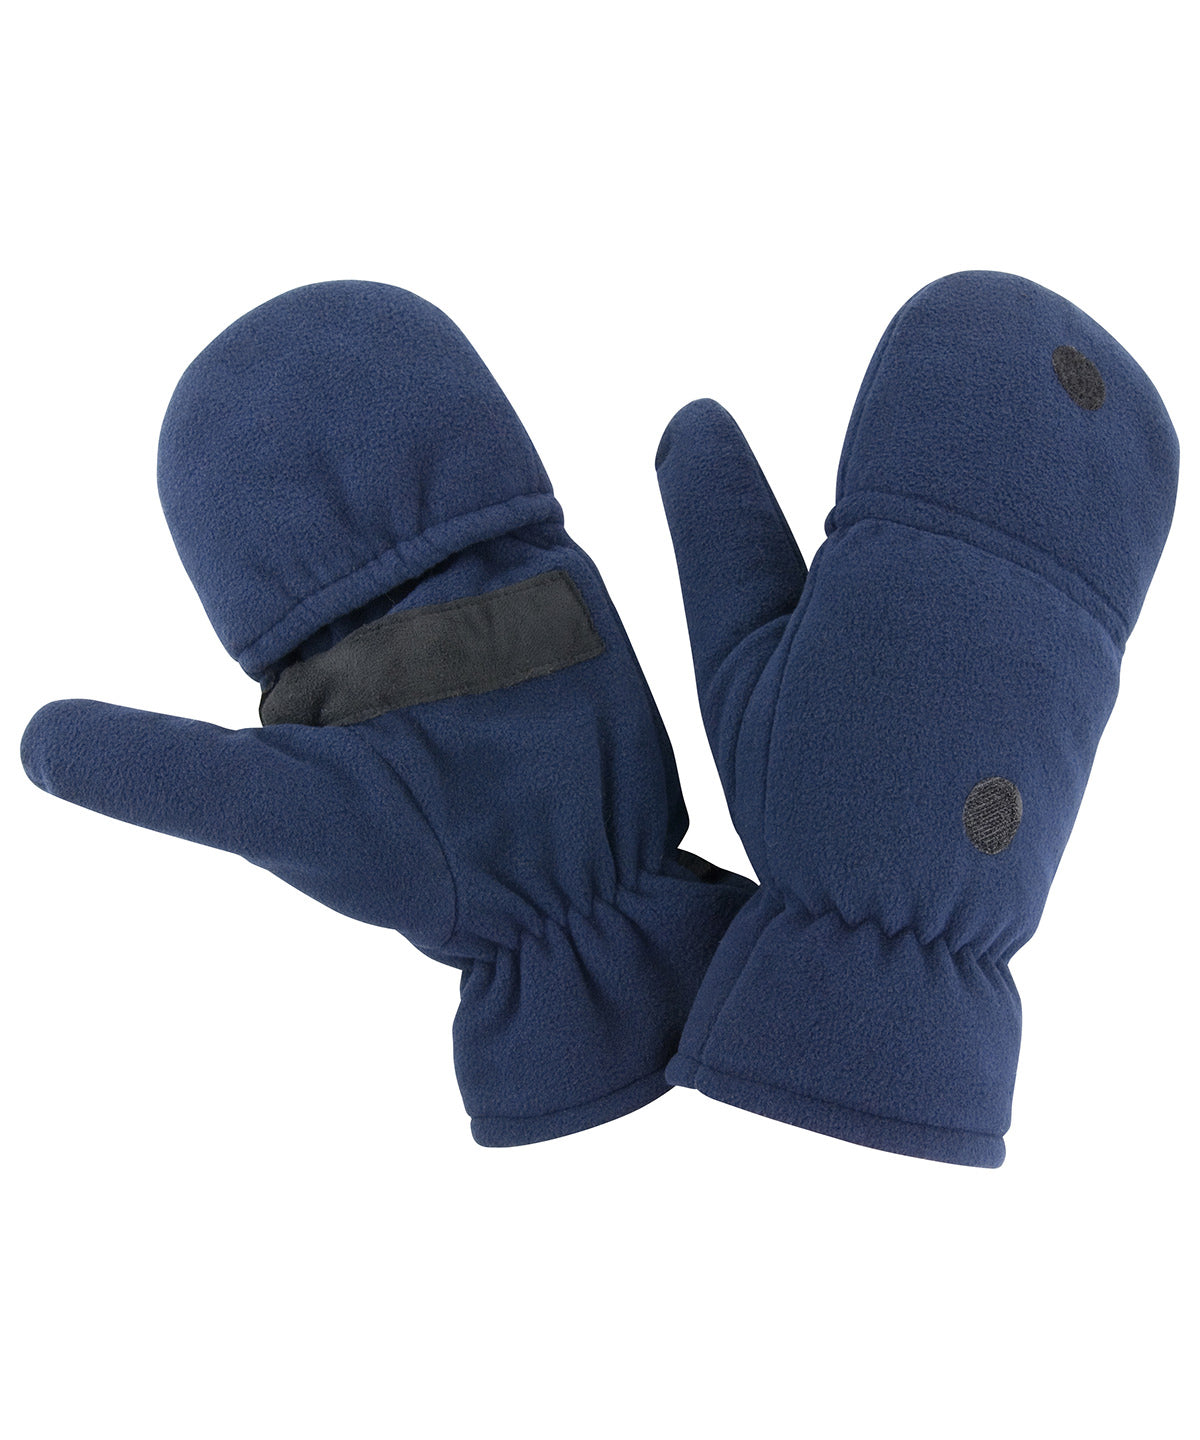 Hanska - Palmgrip Glove-mitt